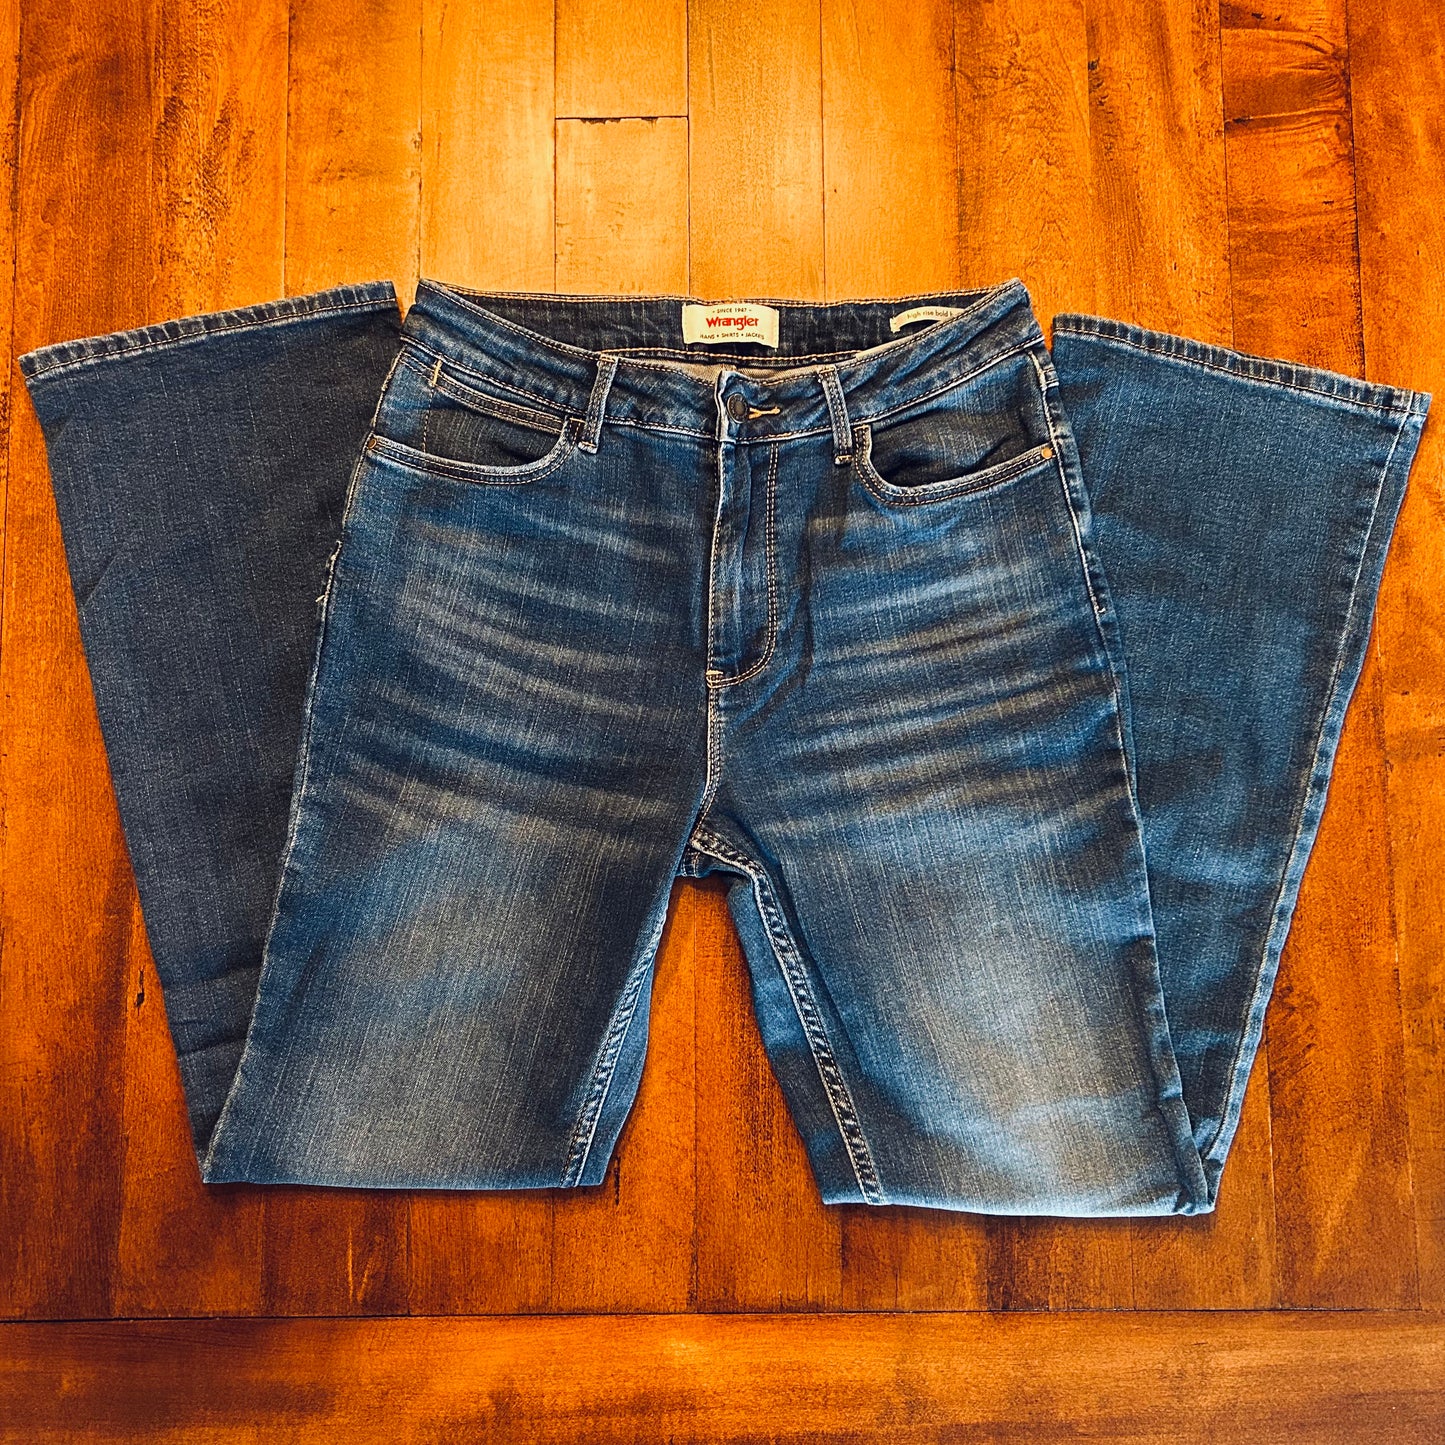 Women’s Wrangler Boot Cut Jeans Size 6x30